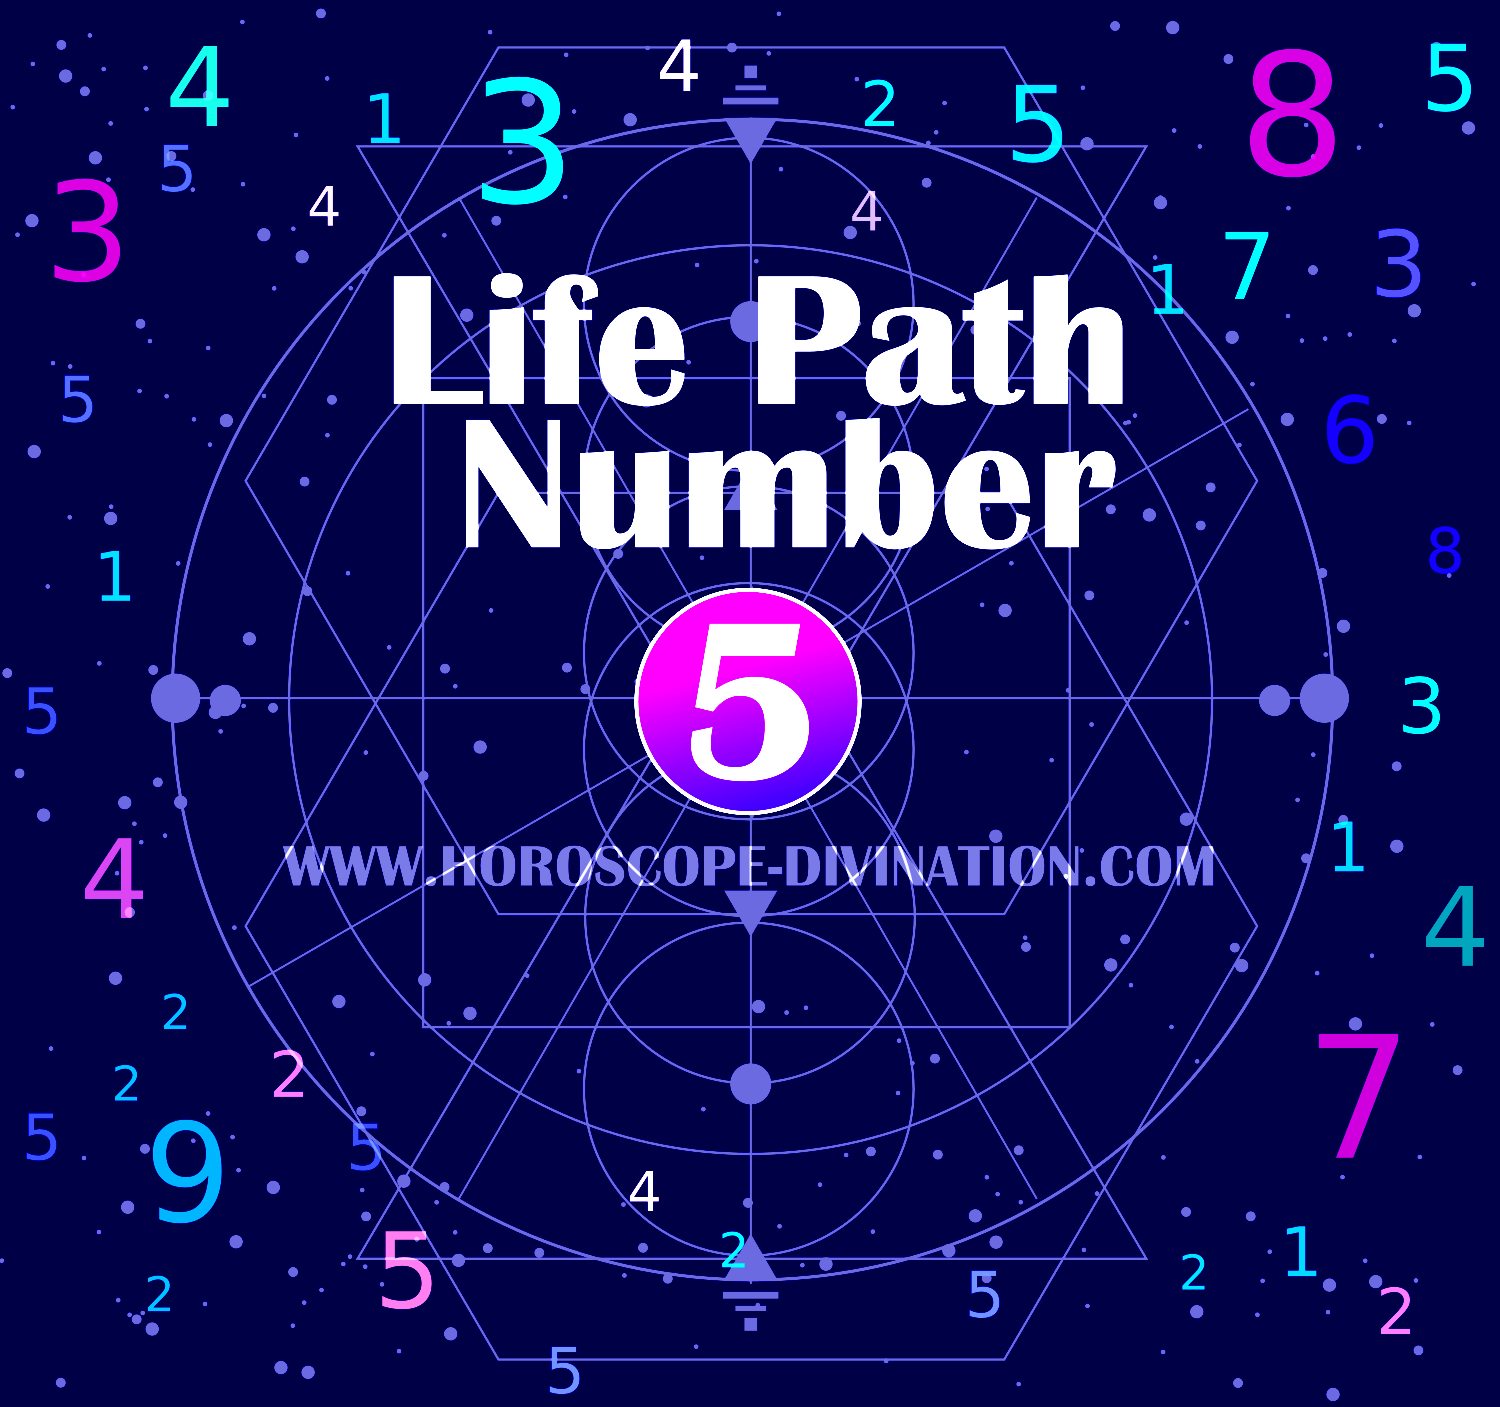 numerology life path number 9 symbols